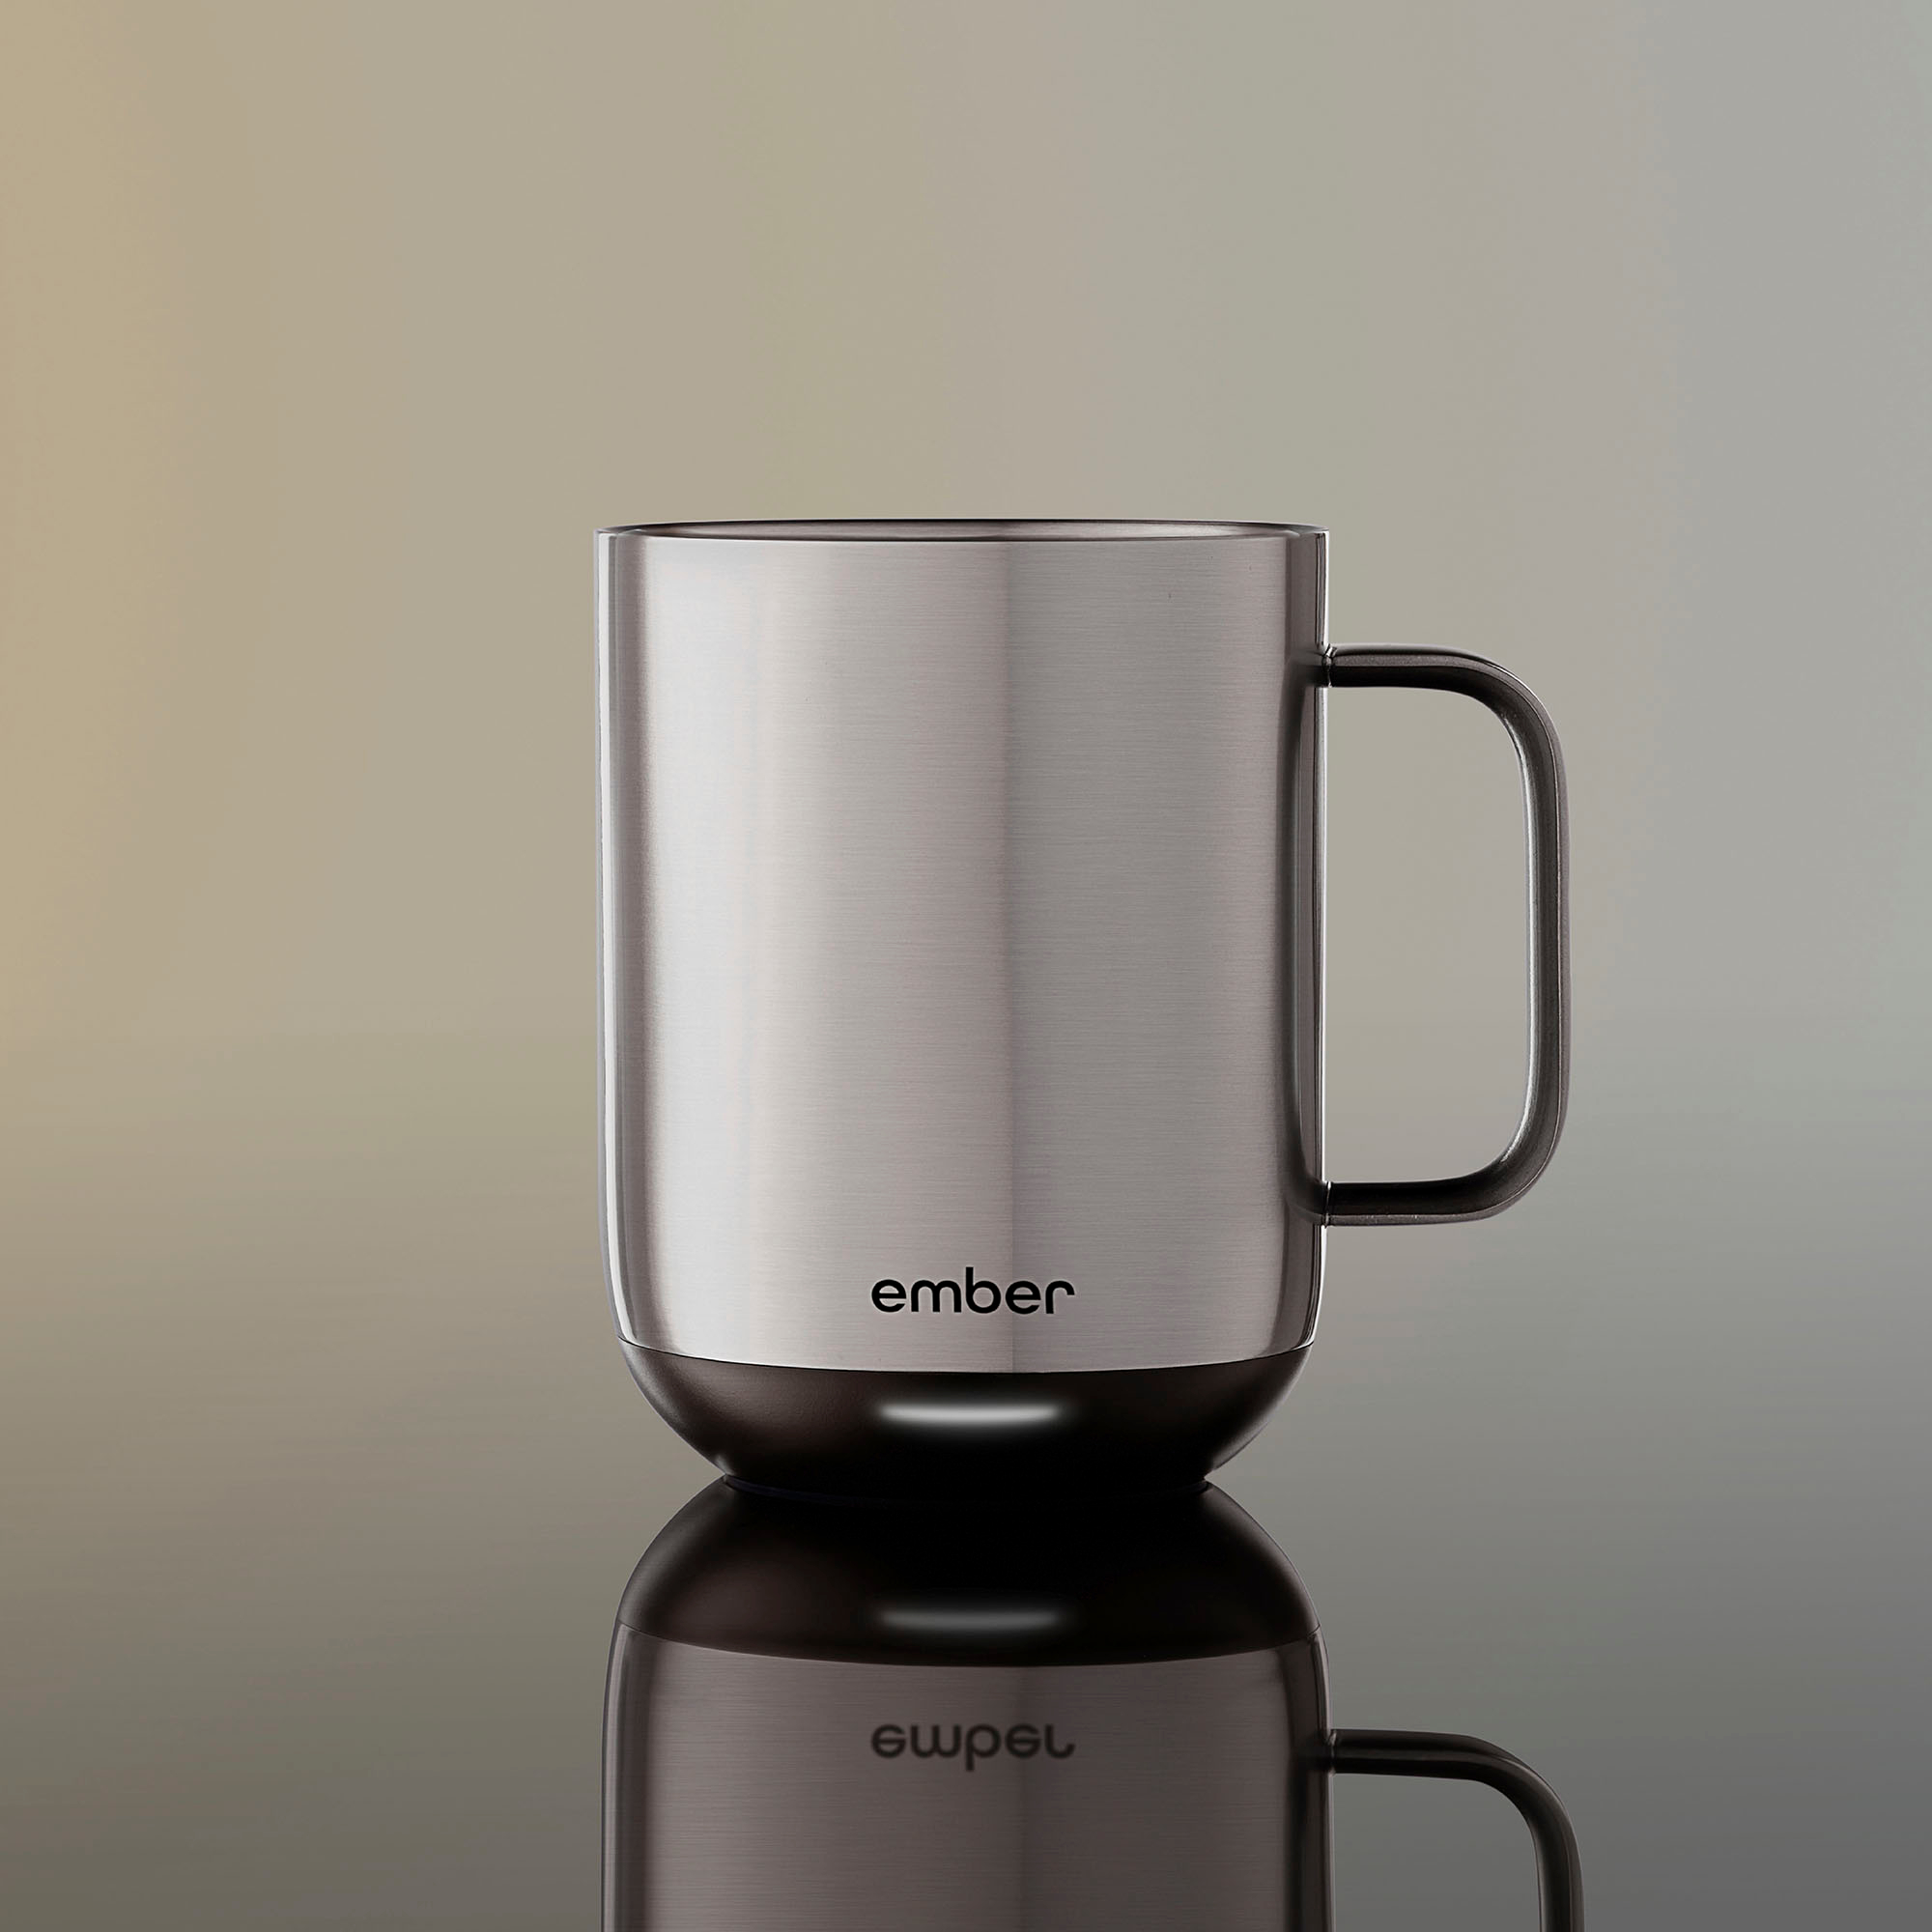 Ember Travel Mug 2+, 12 oz, Temperature Control Smart Travel Mug Black  TM231200US - Best Buy